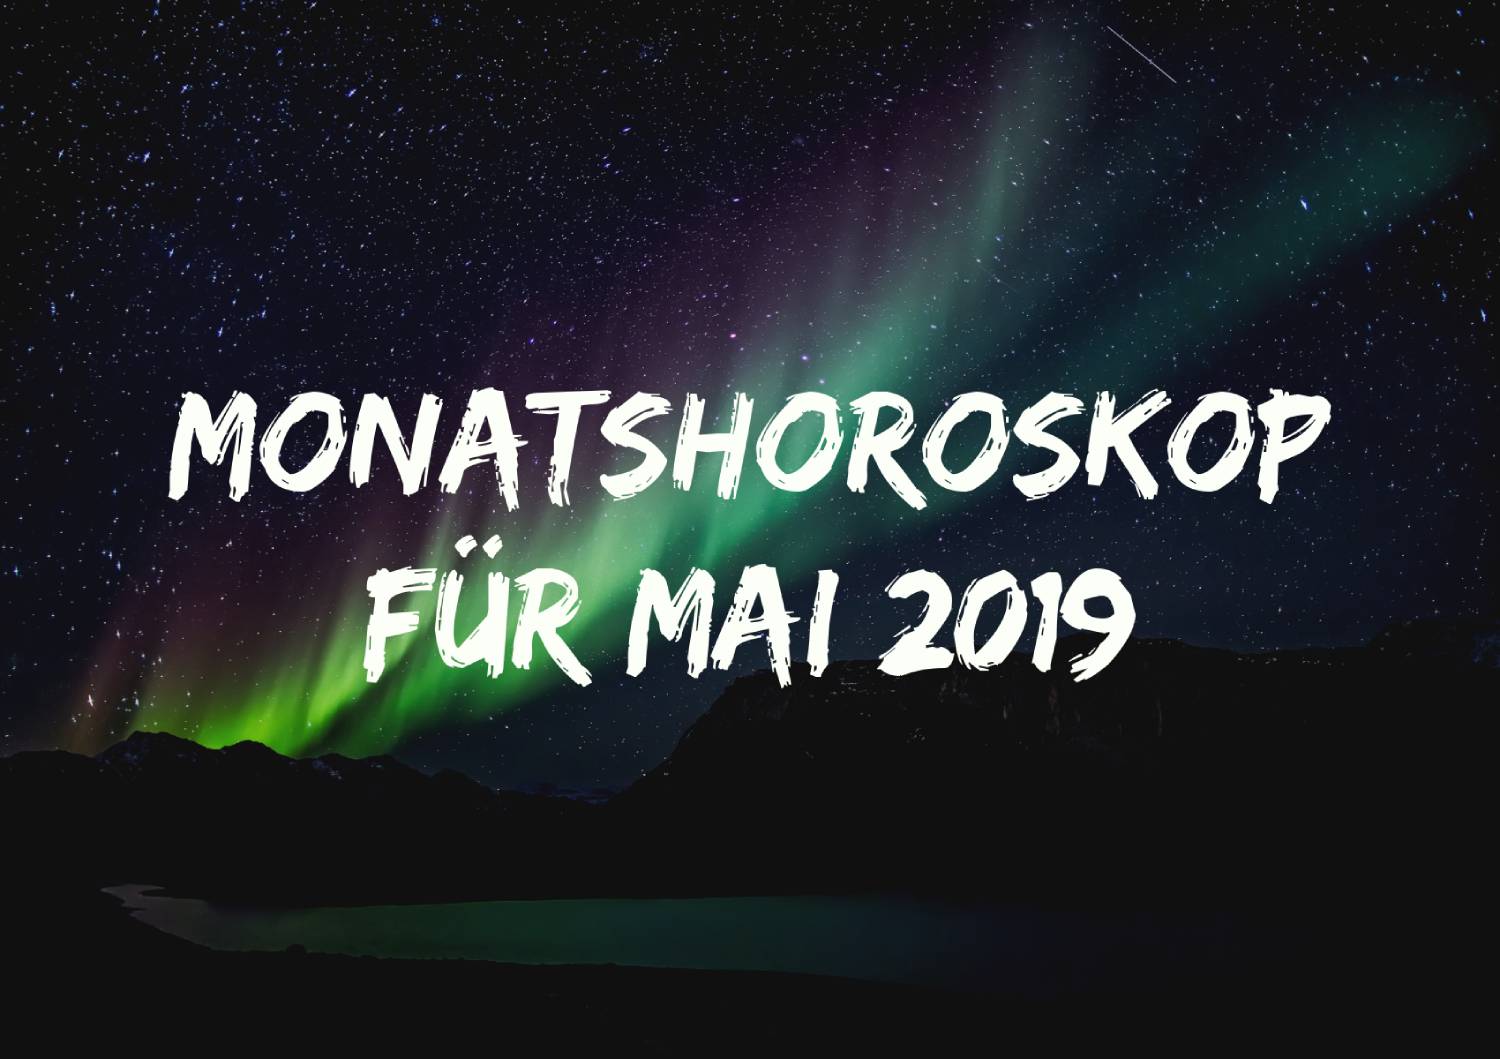 Monatshoroskop für Mai 2019